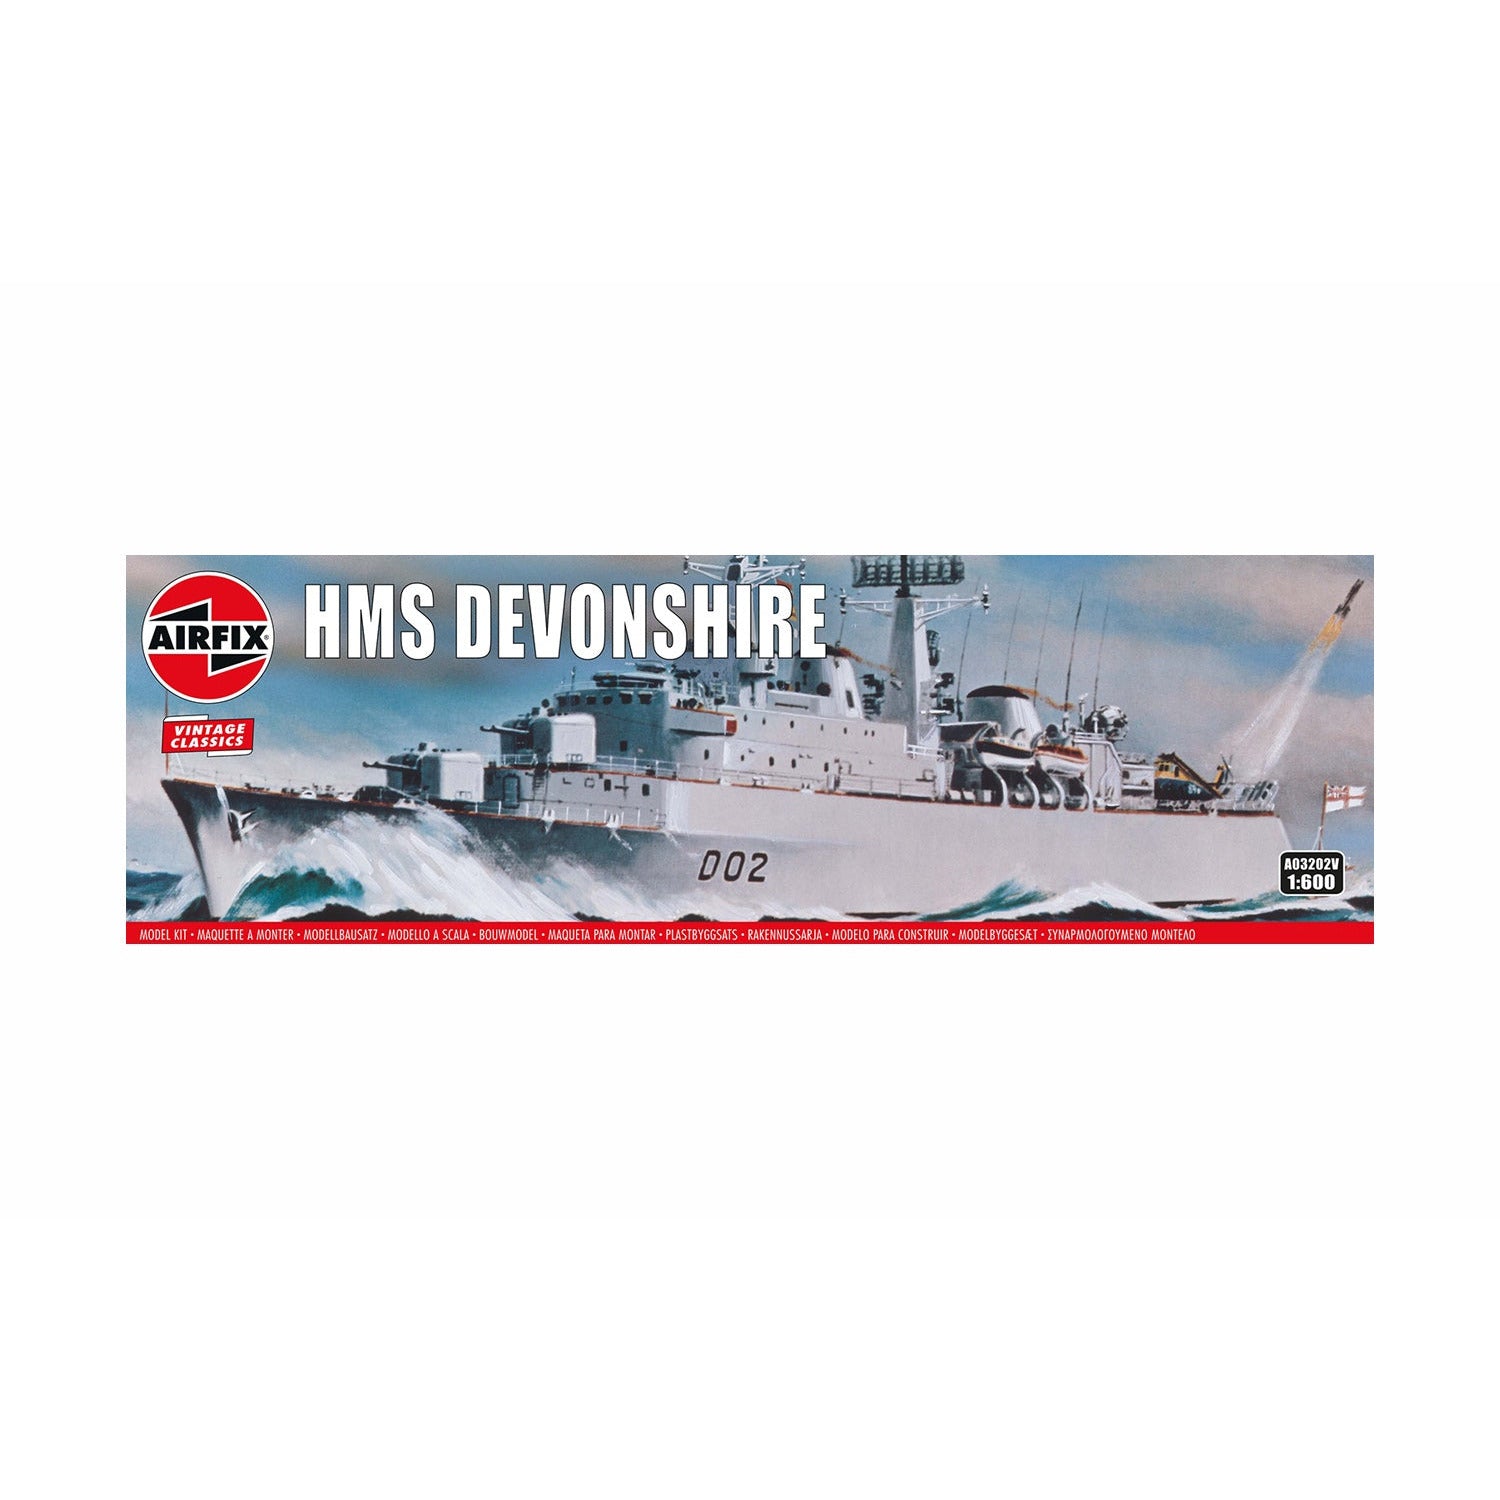 HMS Devonshire 1/600 Model Ship Kit #03202 by Airfix